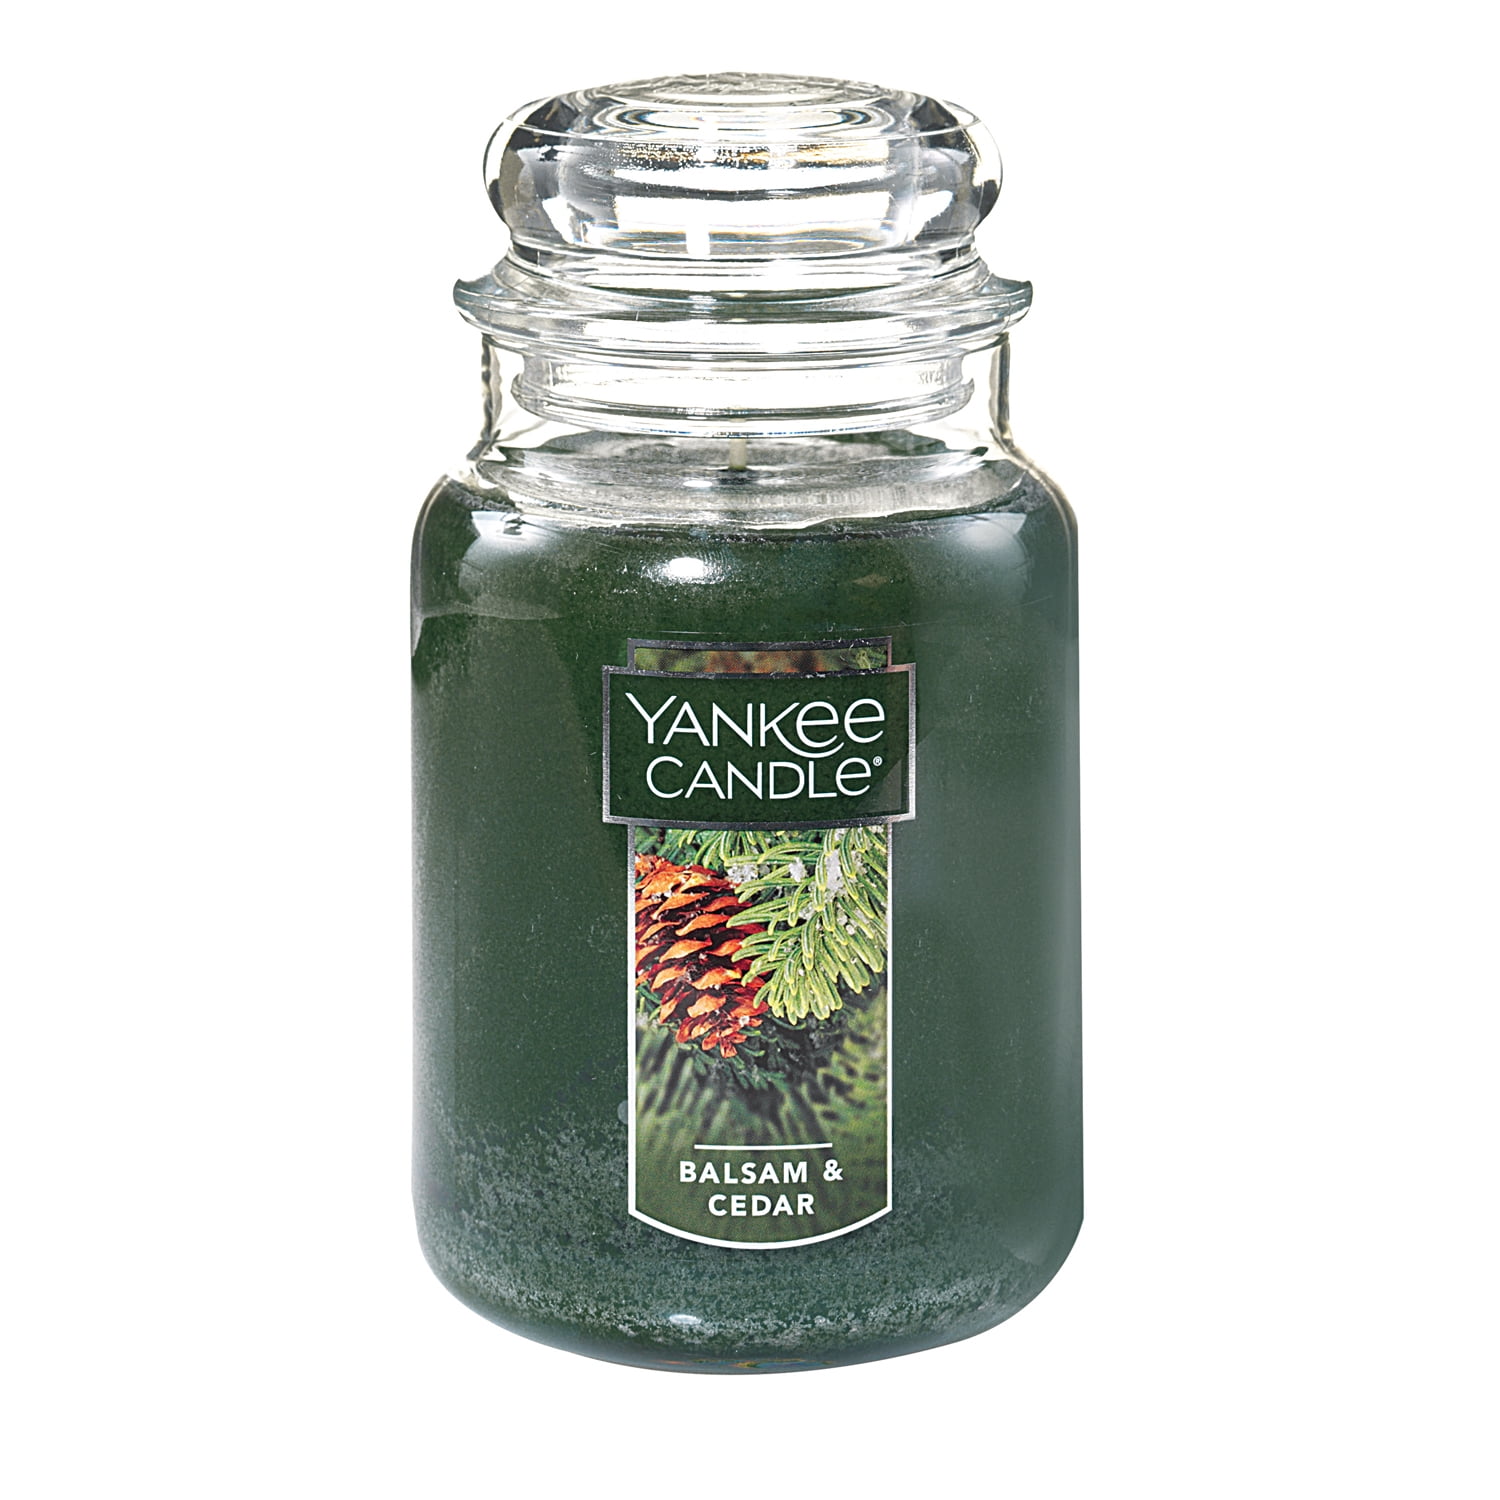 Yankee Candle 22 oz Housewarmer Jar - Clean Cotton - New, Older Stock -  Helia Beer Co